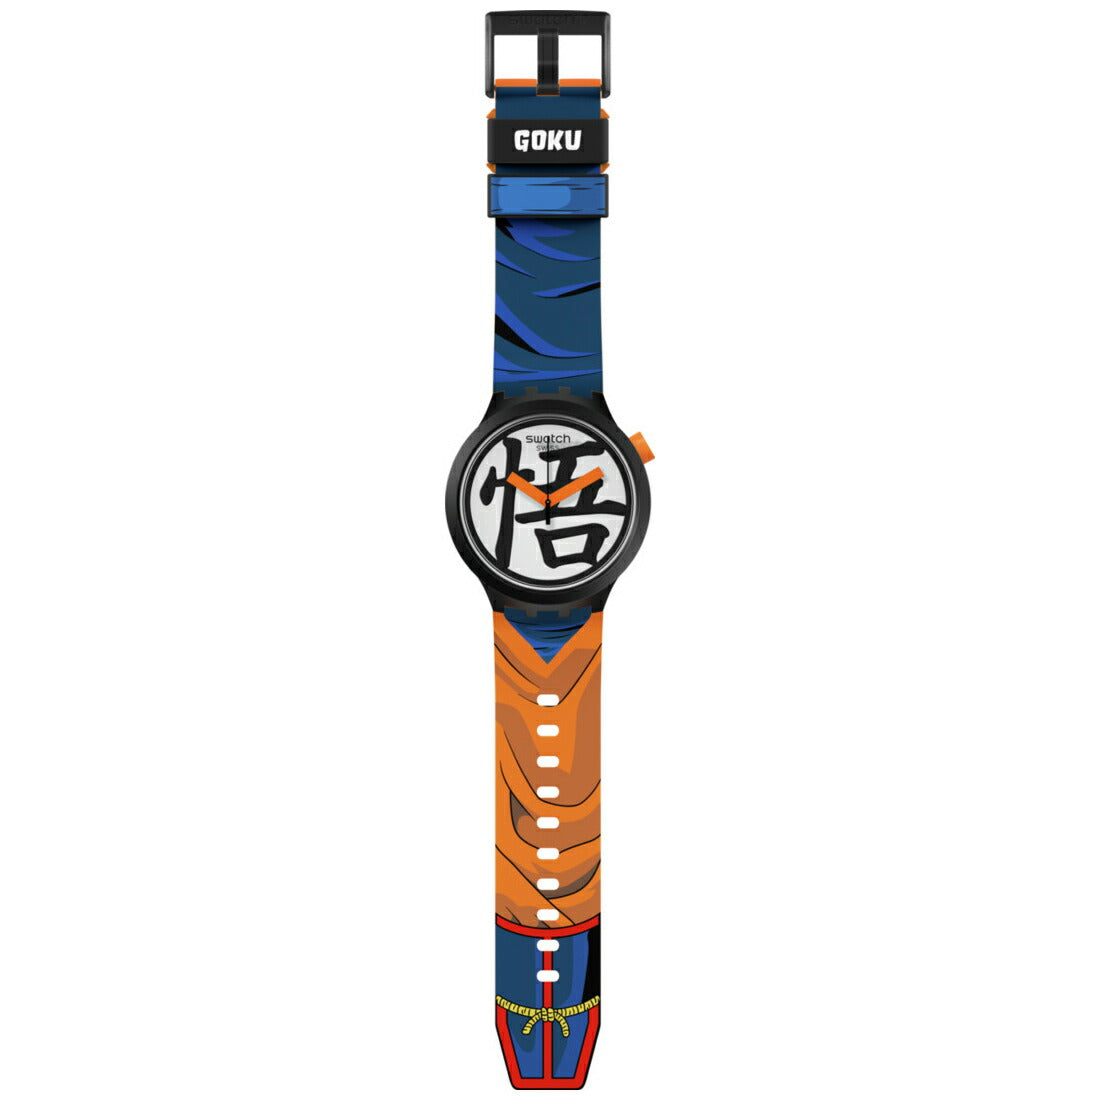 swatch スウォッチ ドラゴンボールZ コラボモデル 悟空 DRAGONBALL Z GOKU 腕時計 SB01Z101